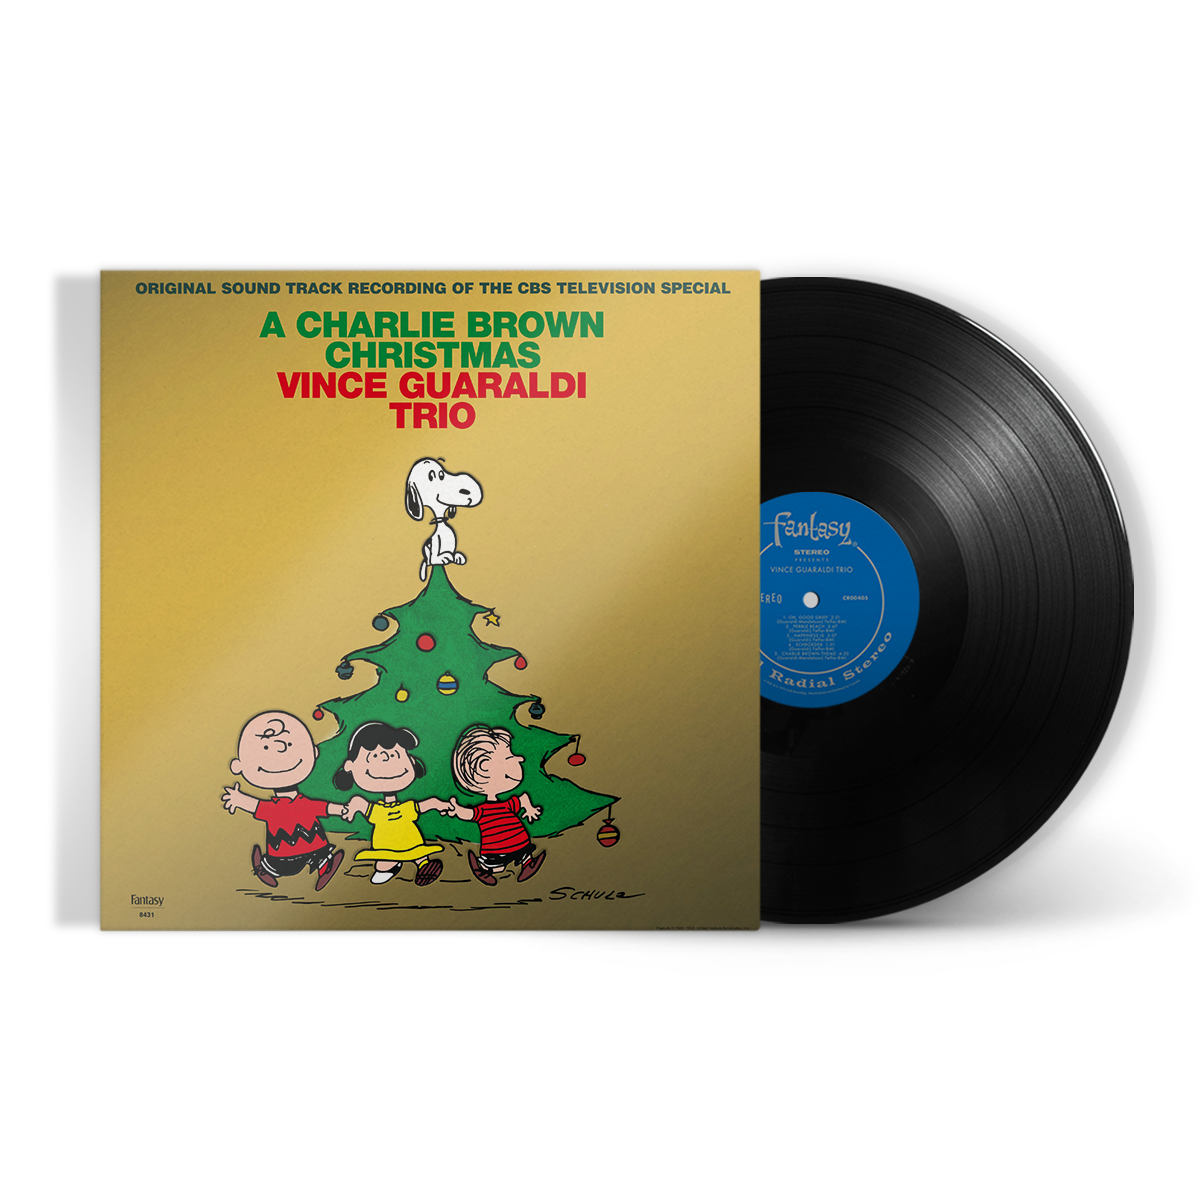 A Charlie Brown Christmas: Gold Foil Edition (Black Vinyl LP)